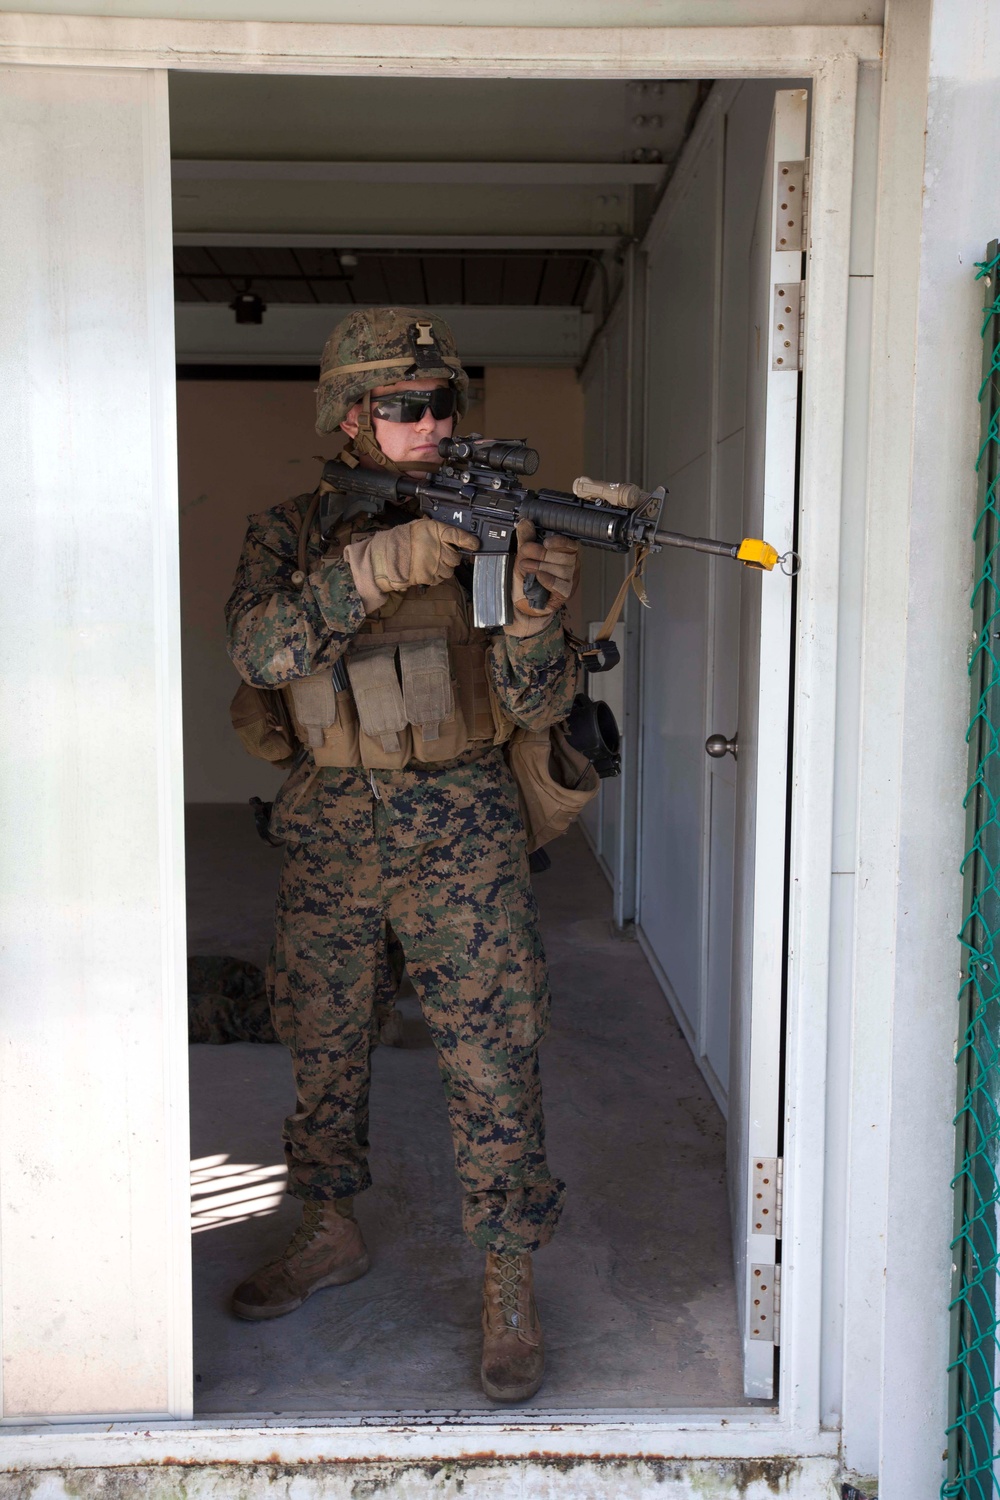 Eleventh Marine Expeditionary Unit conducts urban training